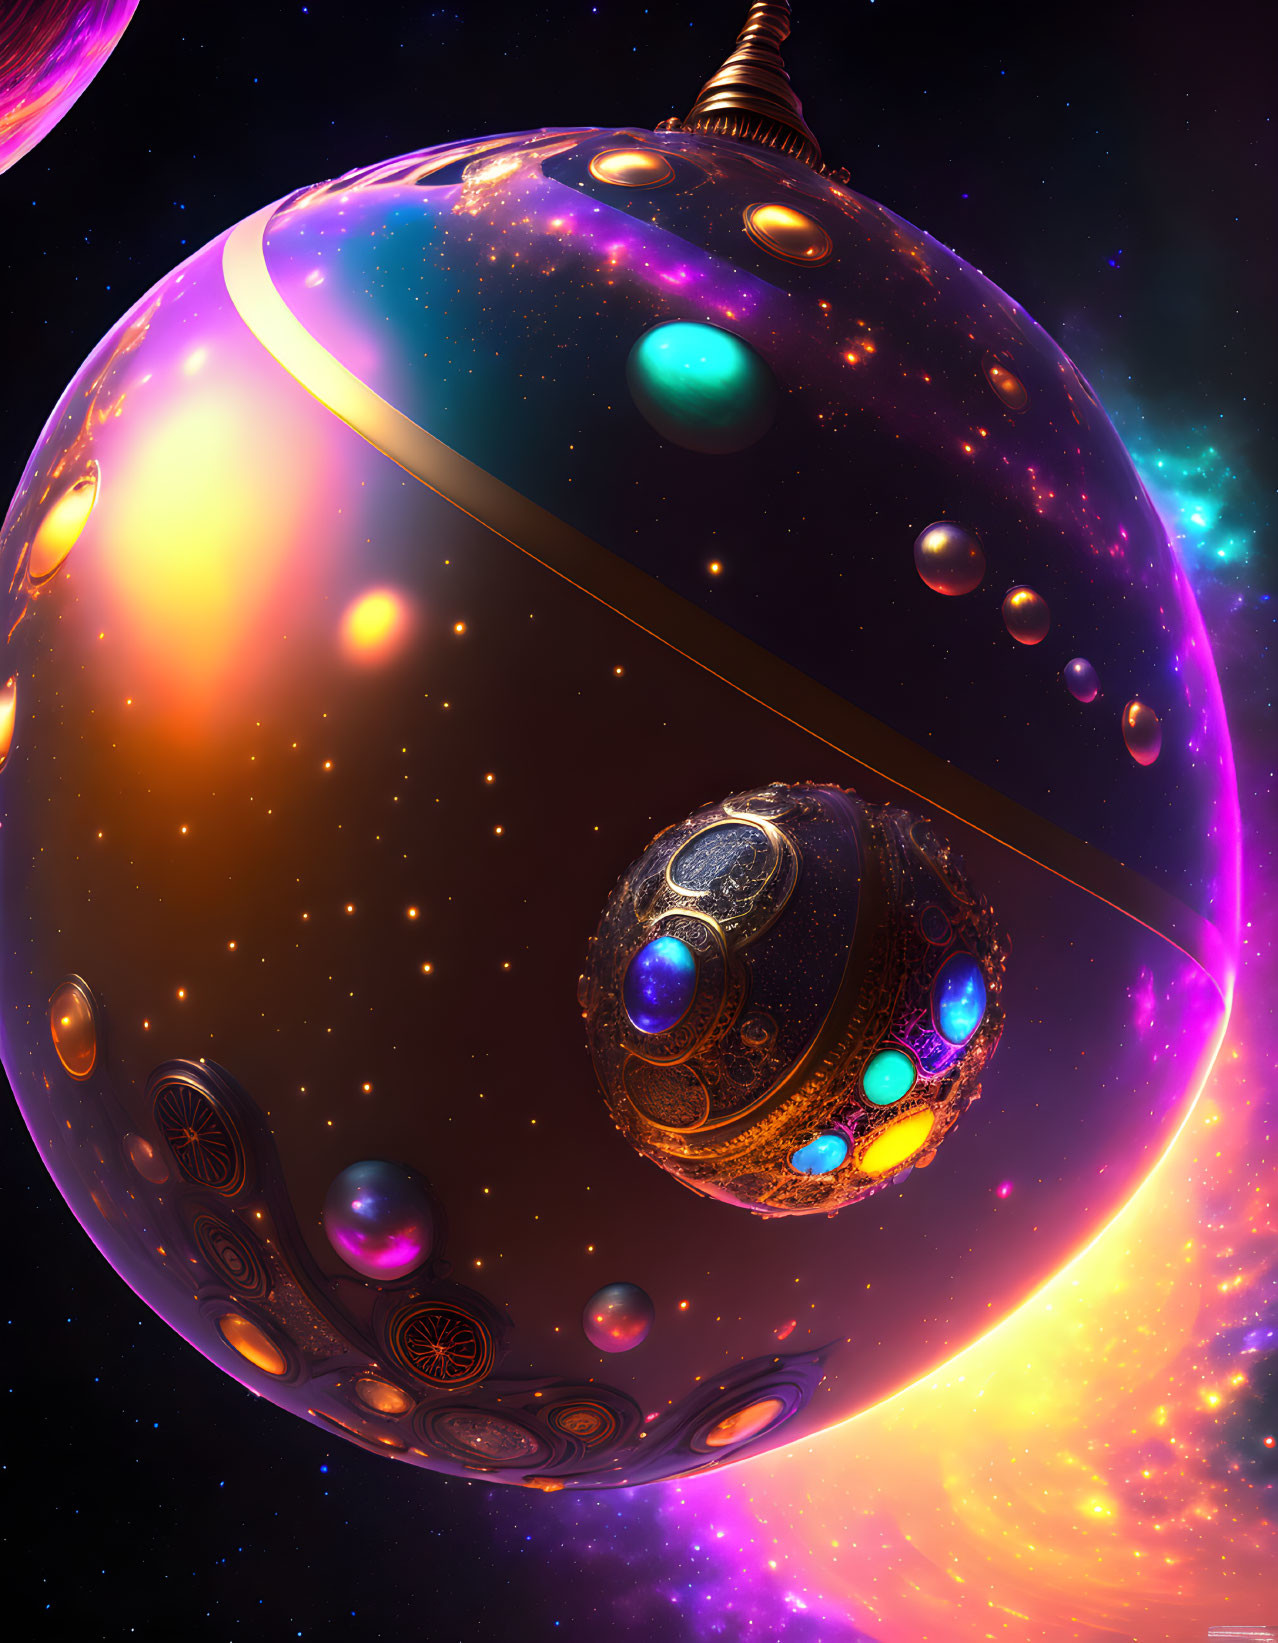 Detailed Digital Artwork: Futuristic Ornate Spheres in Cosmic Setting